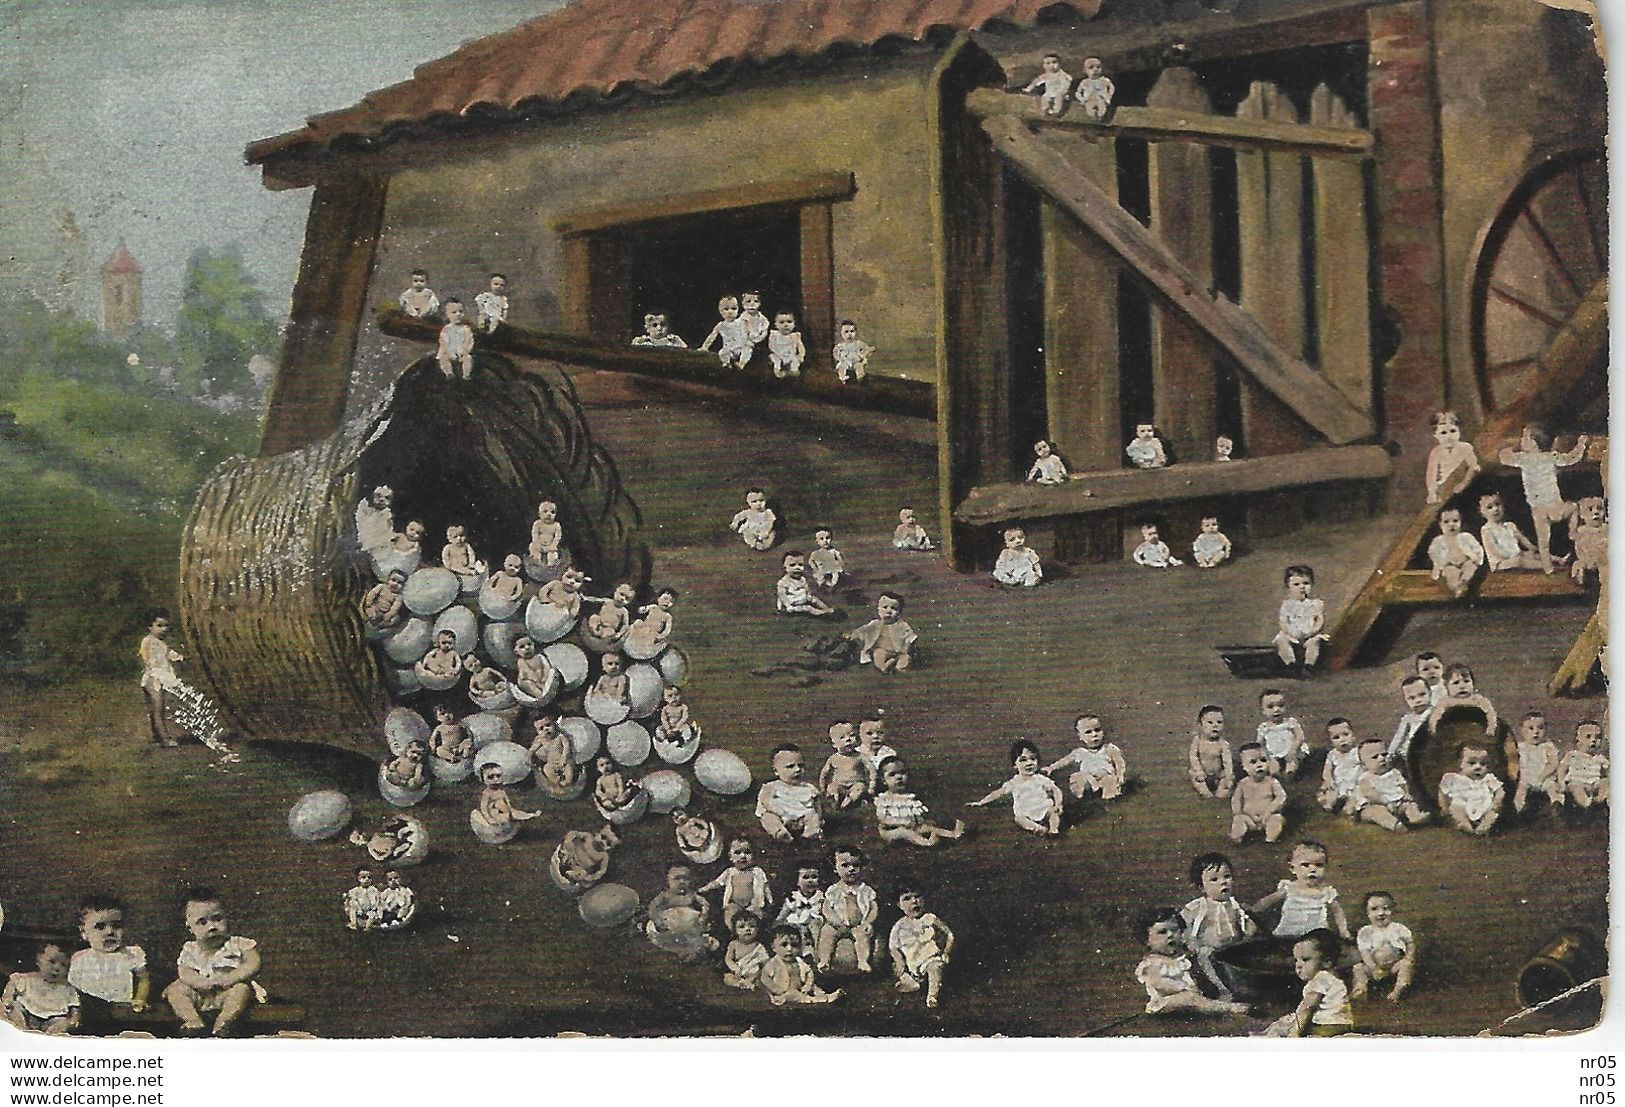 MONTAGE - SURREALISME - MULTIPLE BEBE ENFANT - SURREAL CARD MULTIPLE BABIES BABY CHILDREN ( 1906 ) - Neonati